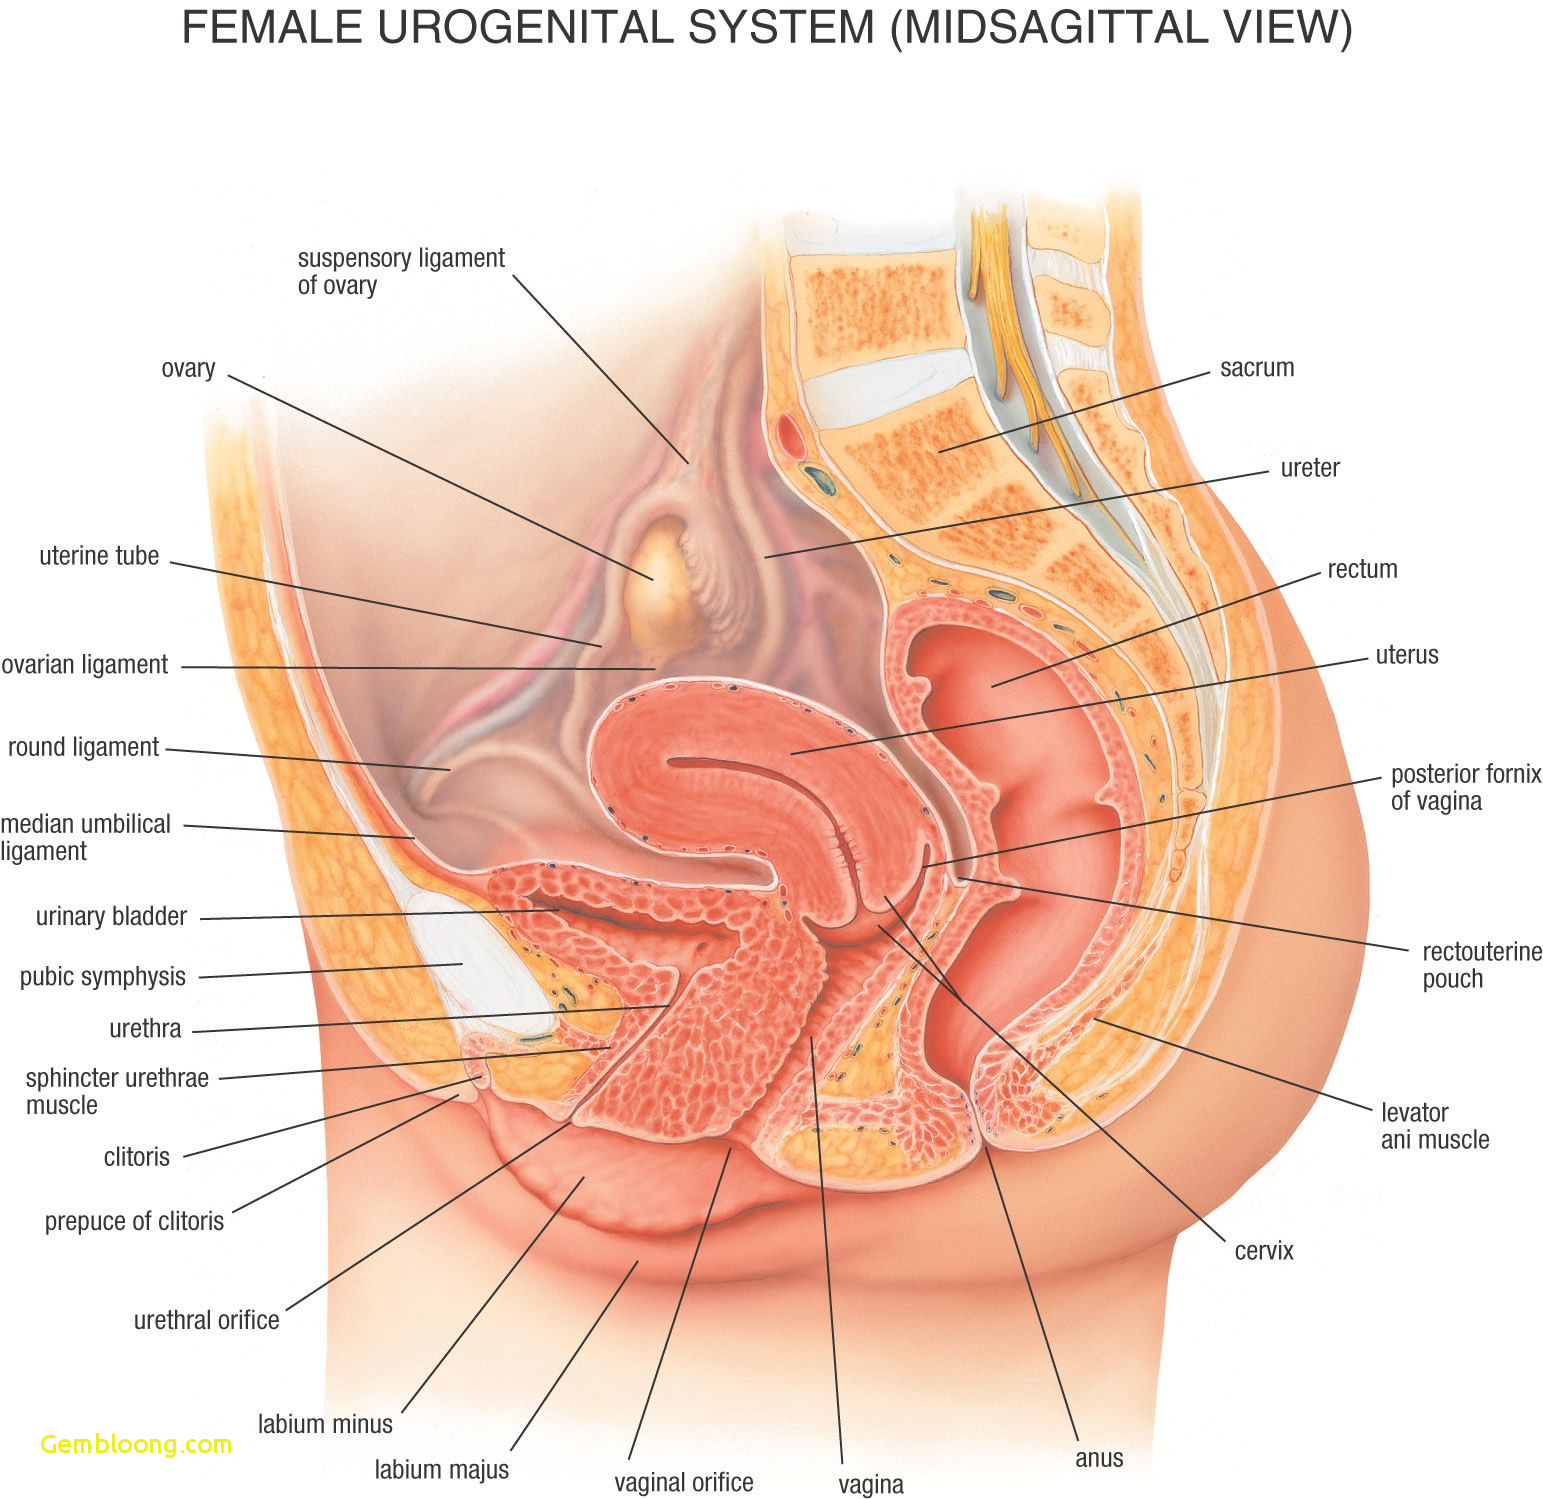 Human Anatomy Diagram The Male Anatomy Internal Female Organs Diagram Human Anatomy